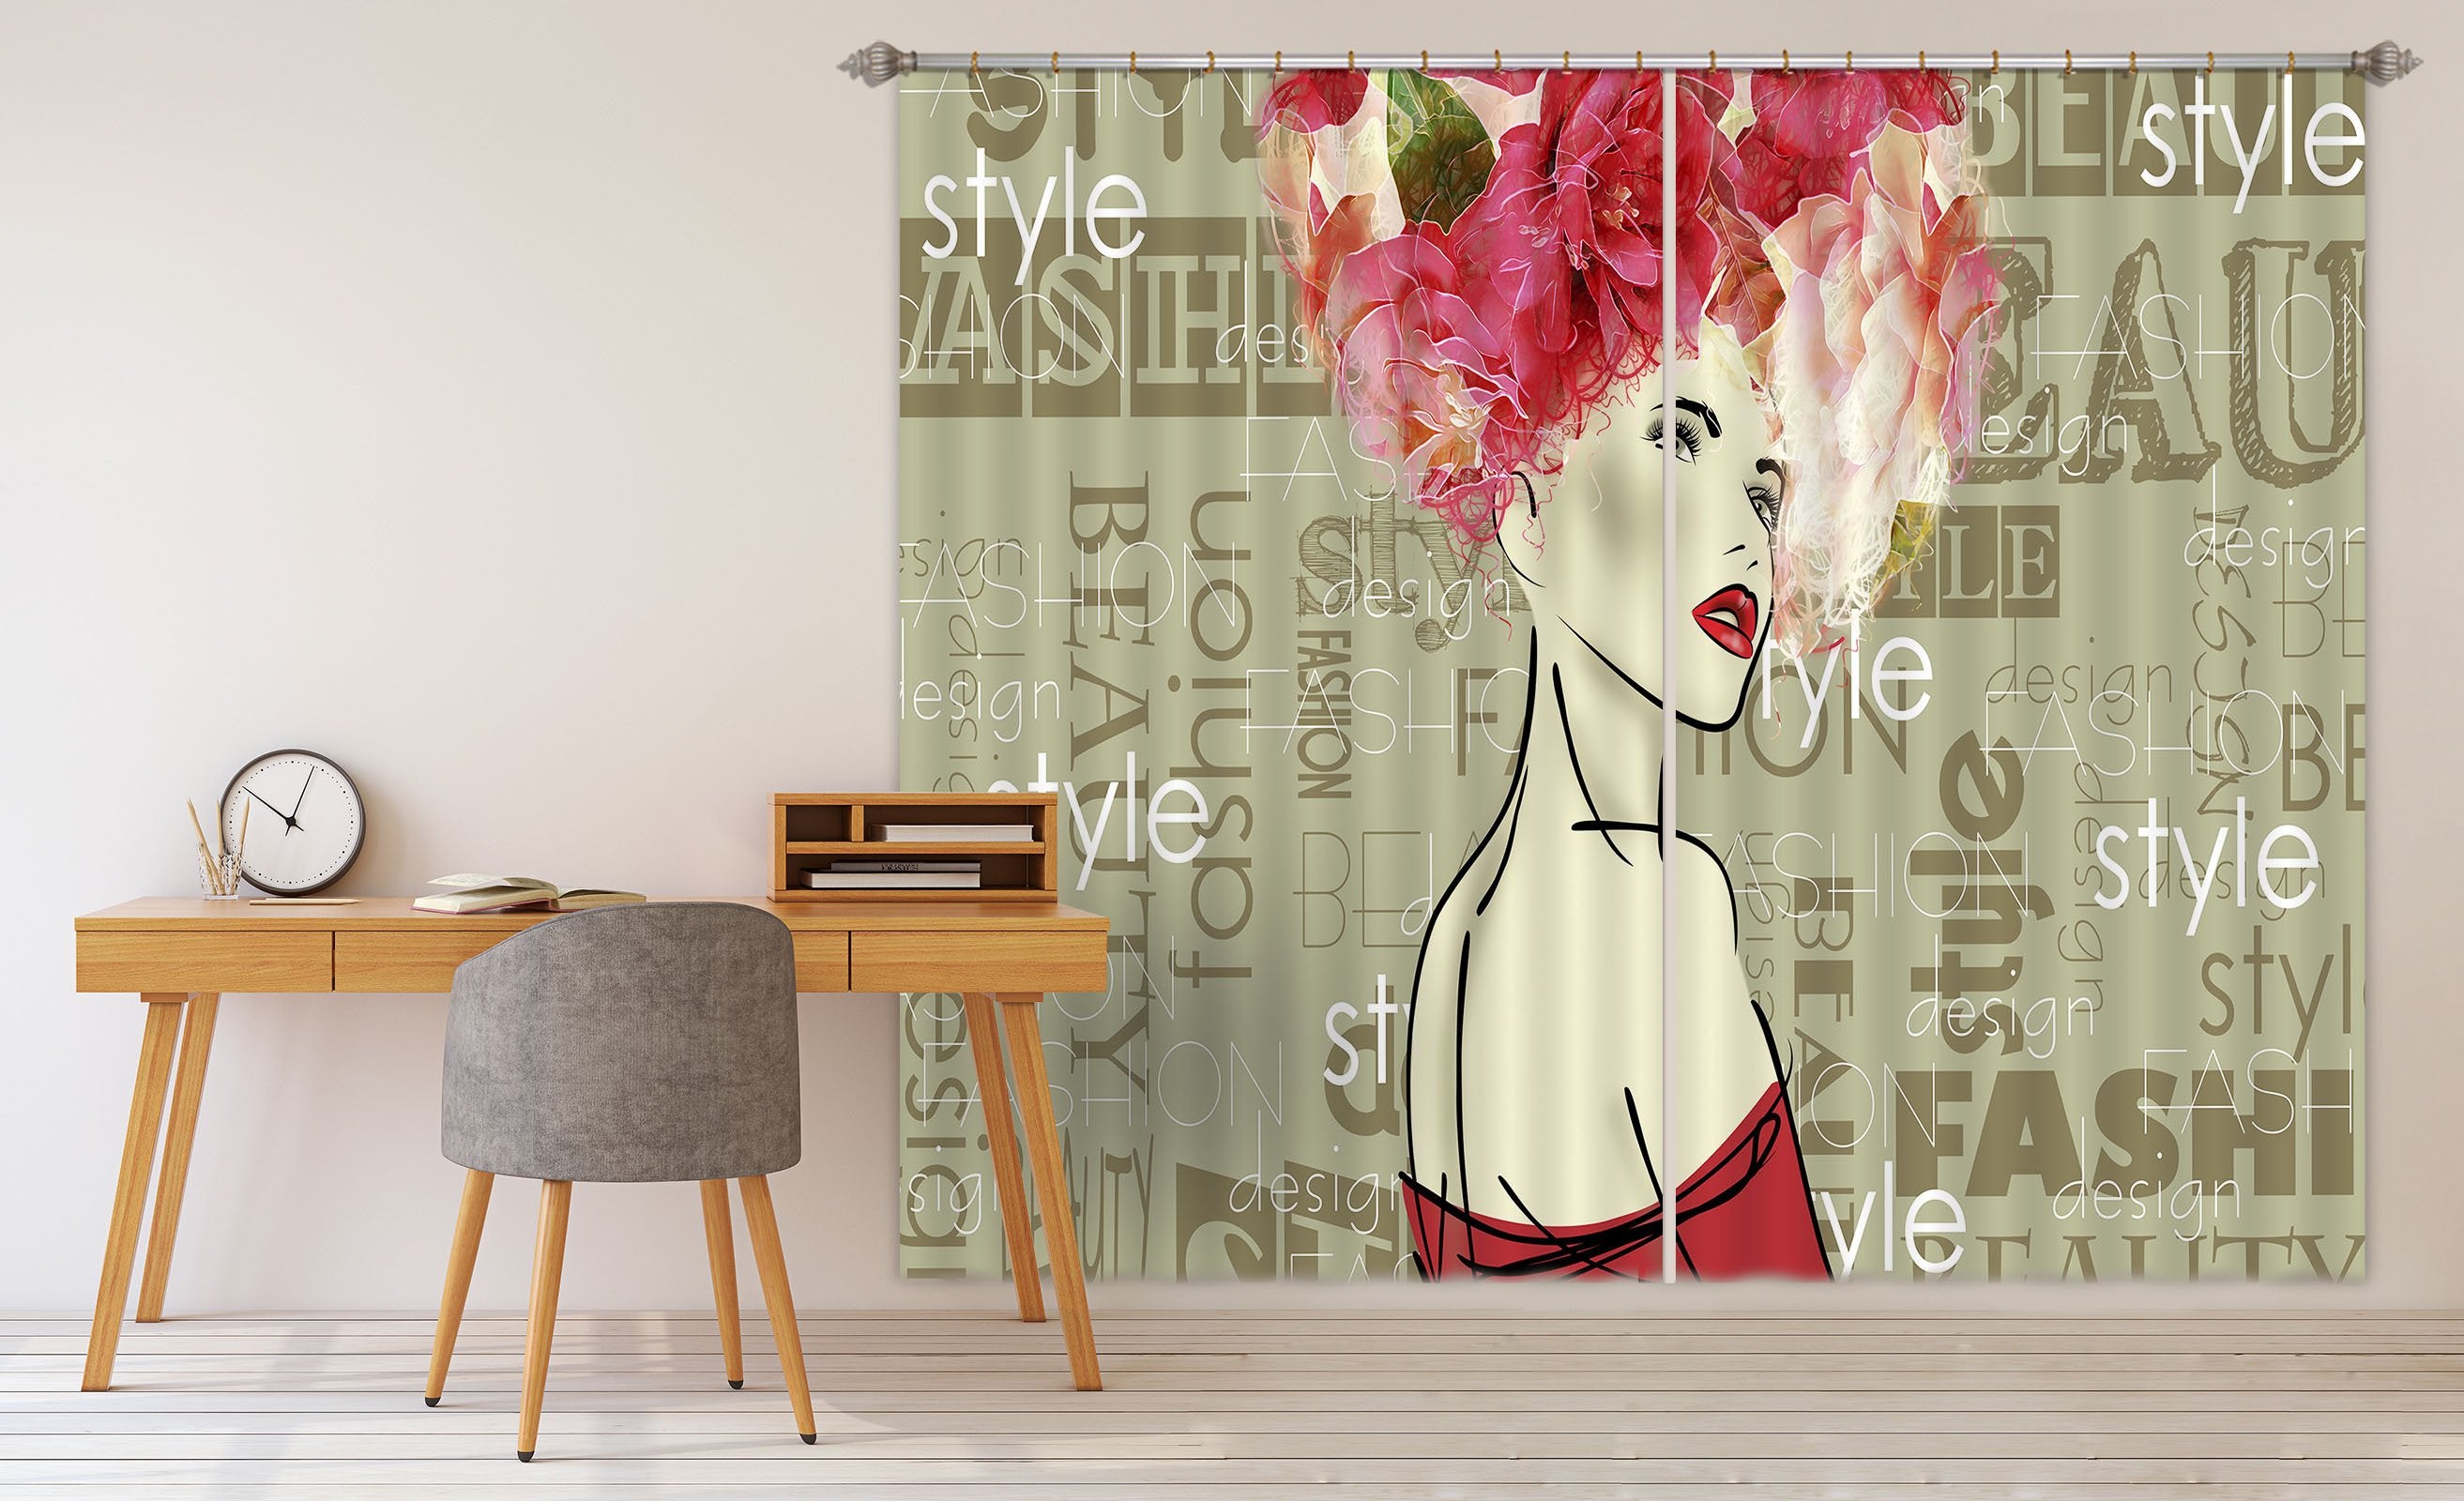 3D Aristocratic Girl 783 Curtains Drapes Wallpaper AJ Wallpaper 